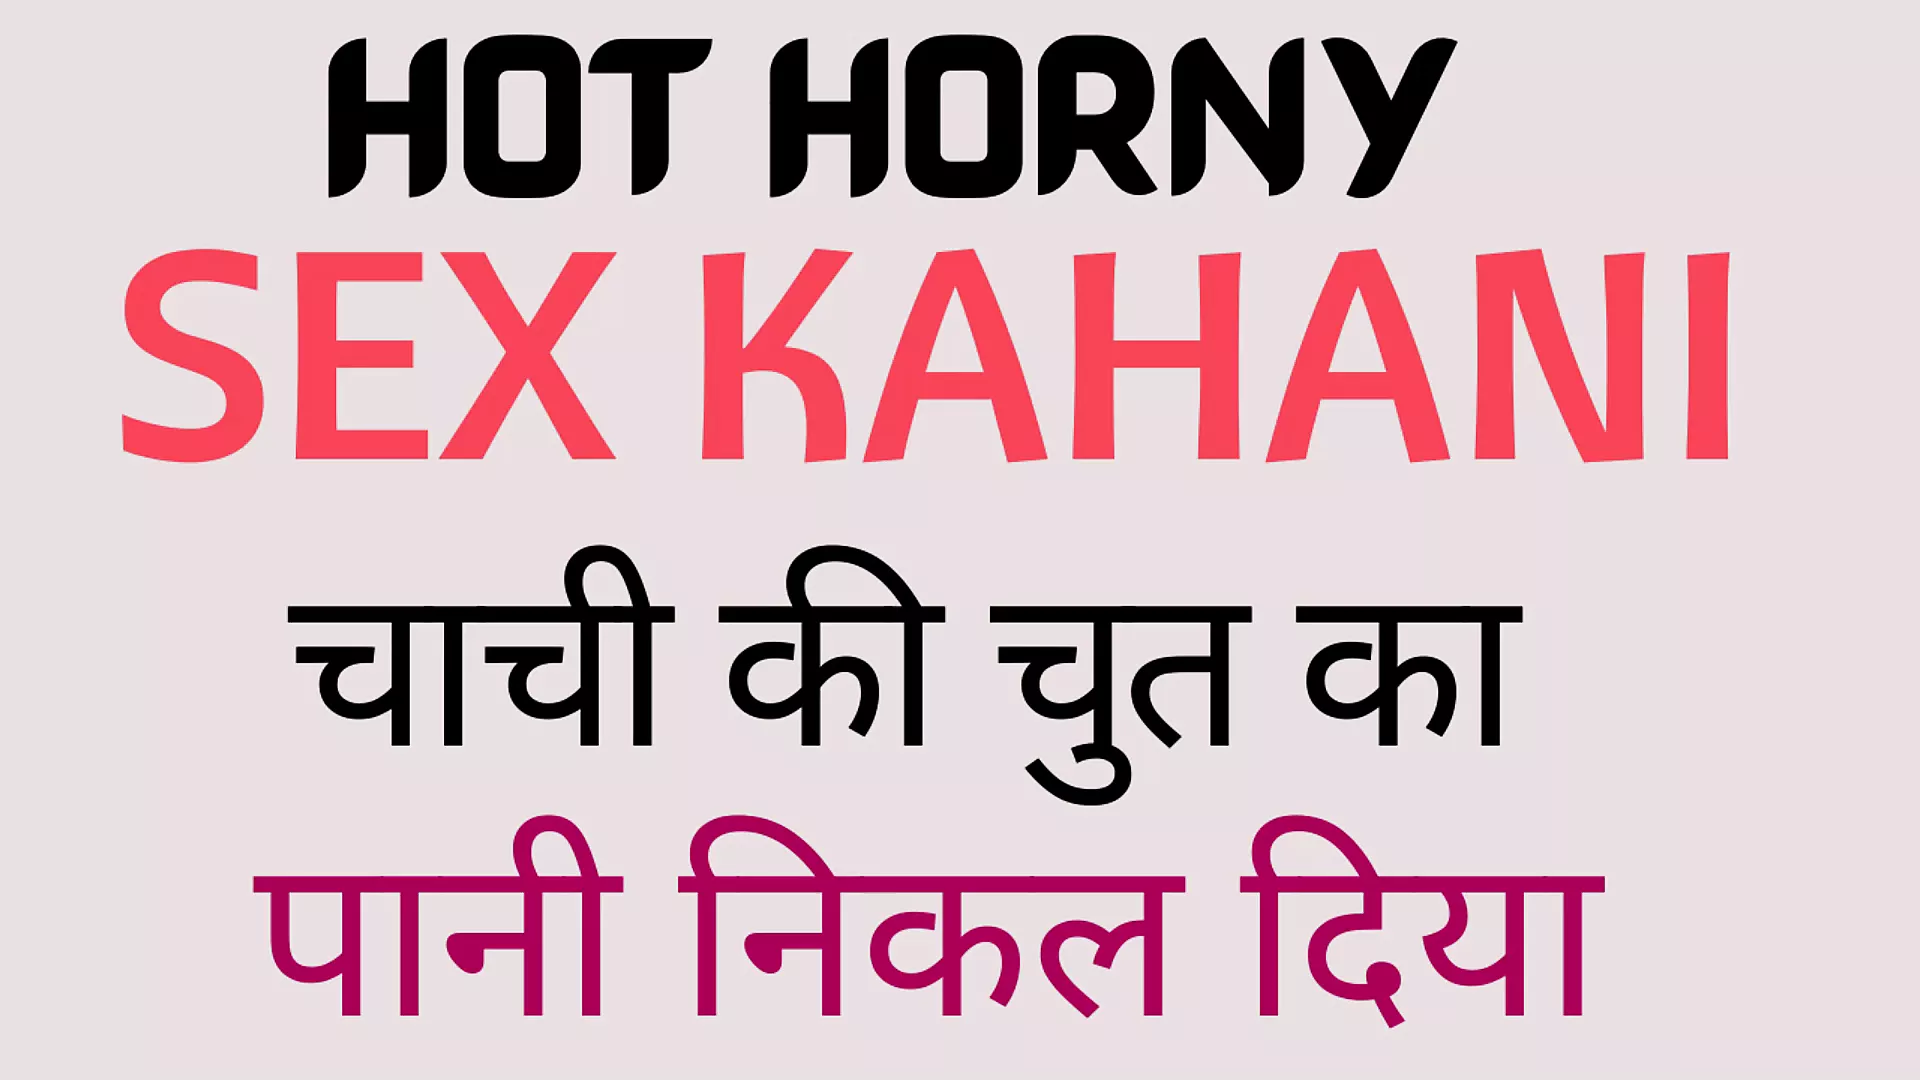 Antarvasna Kahani Hindi - Hot Horny Sex Kahani Sex Story Chachi Ki Chut Ka Pani | xHamster